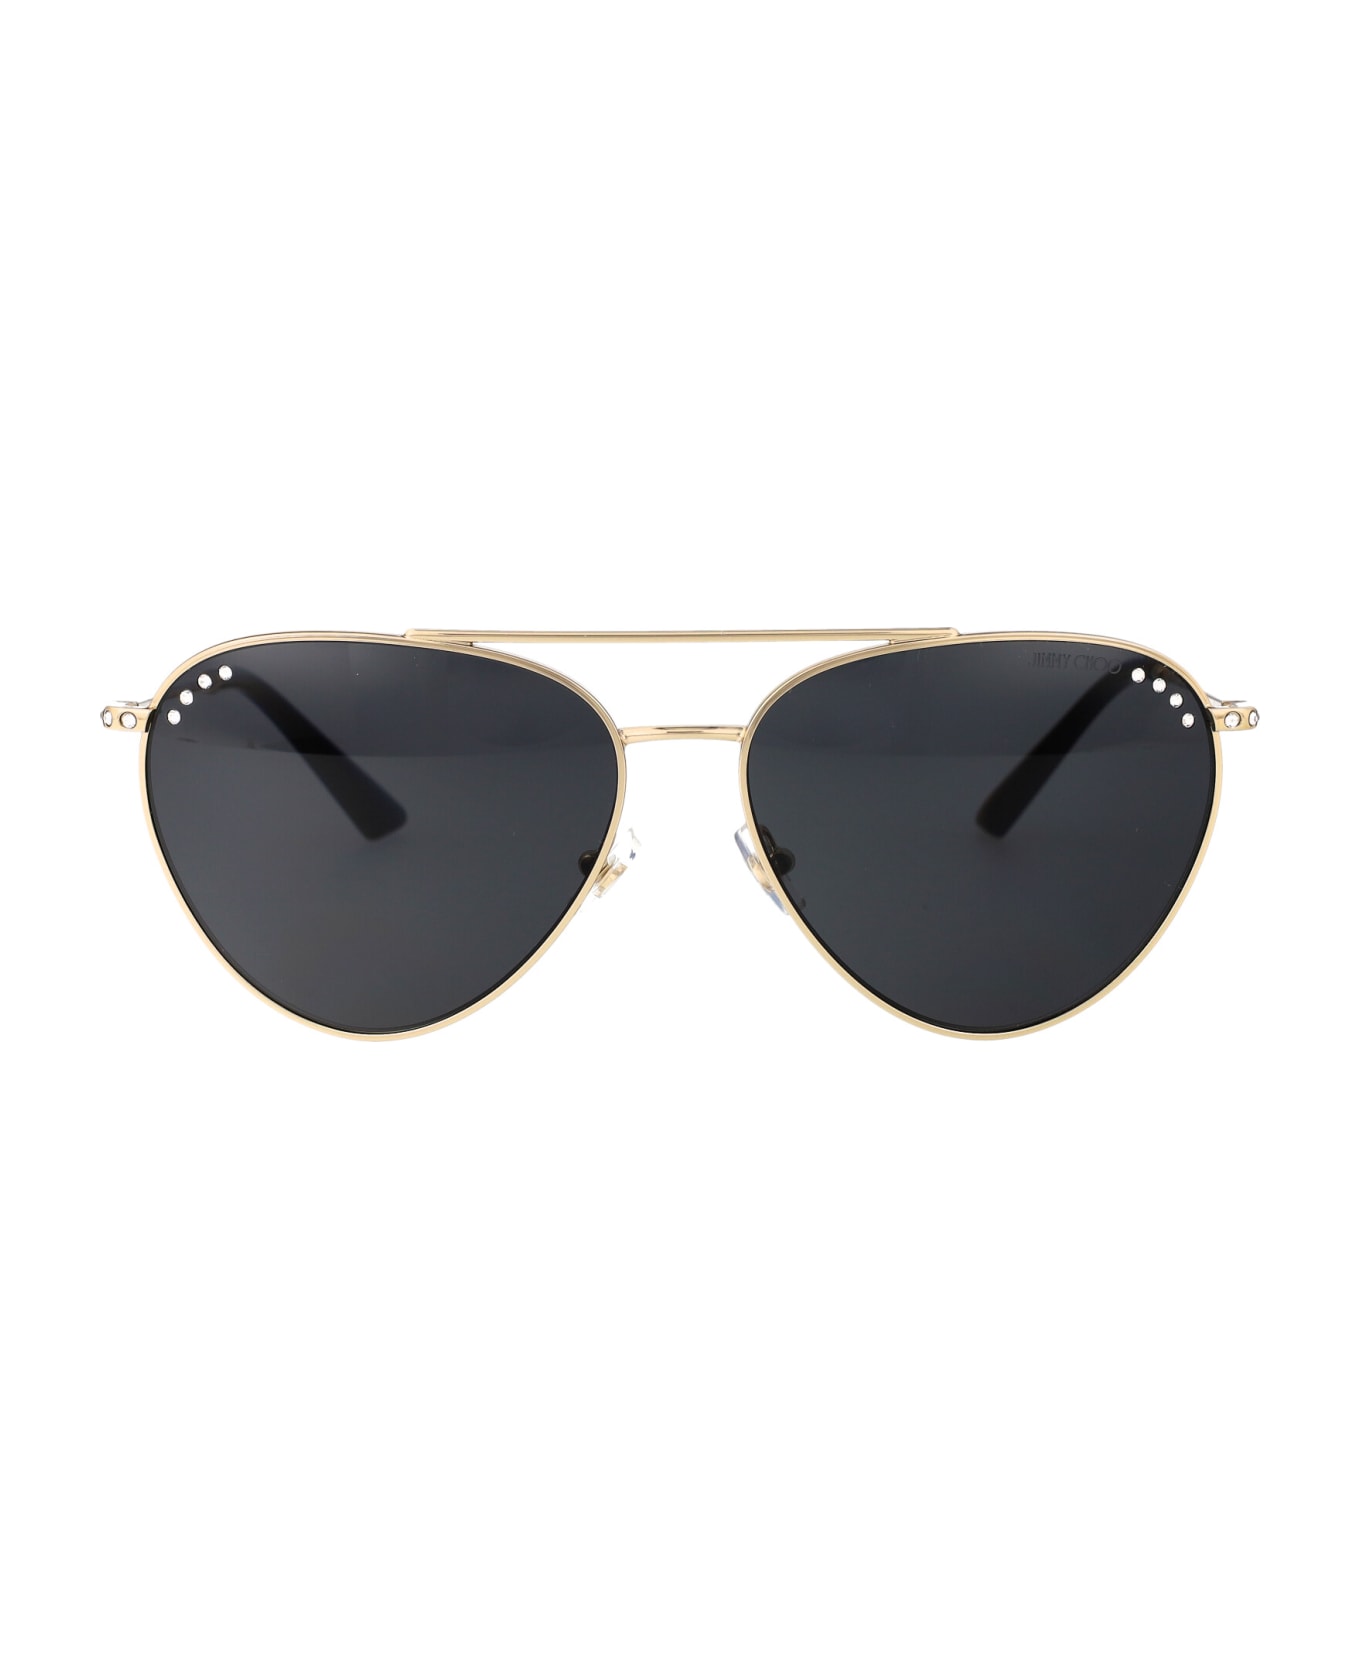 Jimmy Choo Eyewear 0jc4002b Sunglasses - 300687 Pale Gold